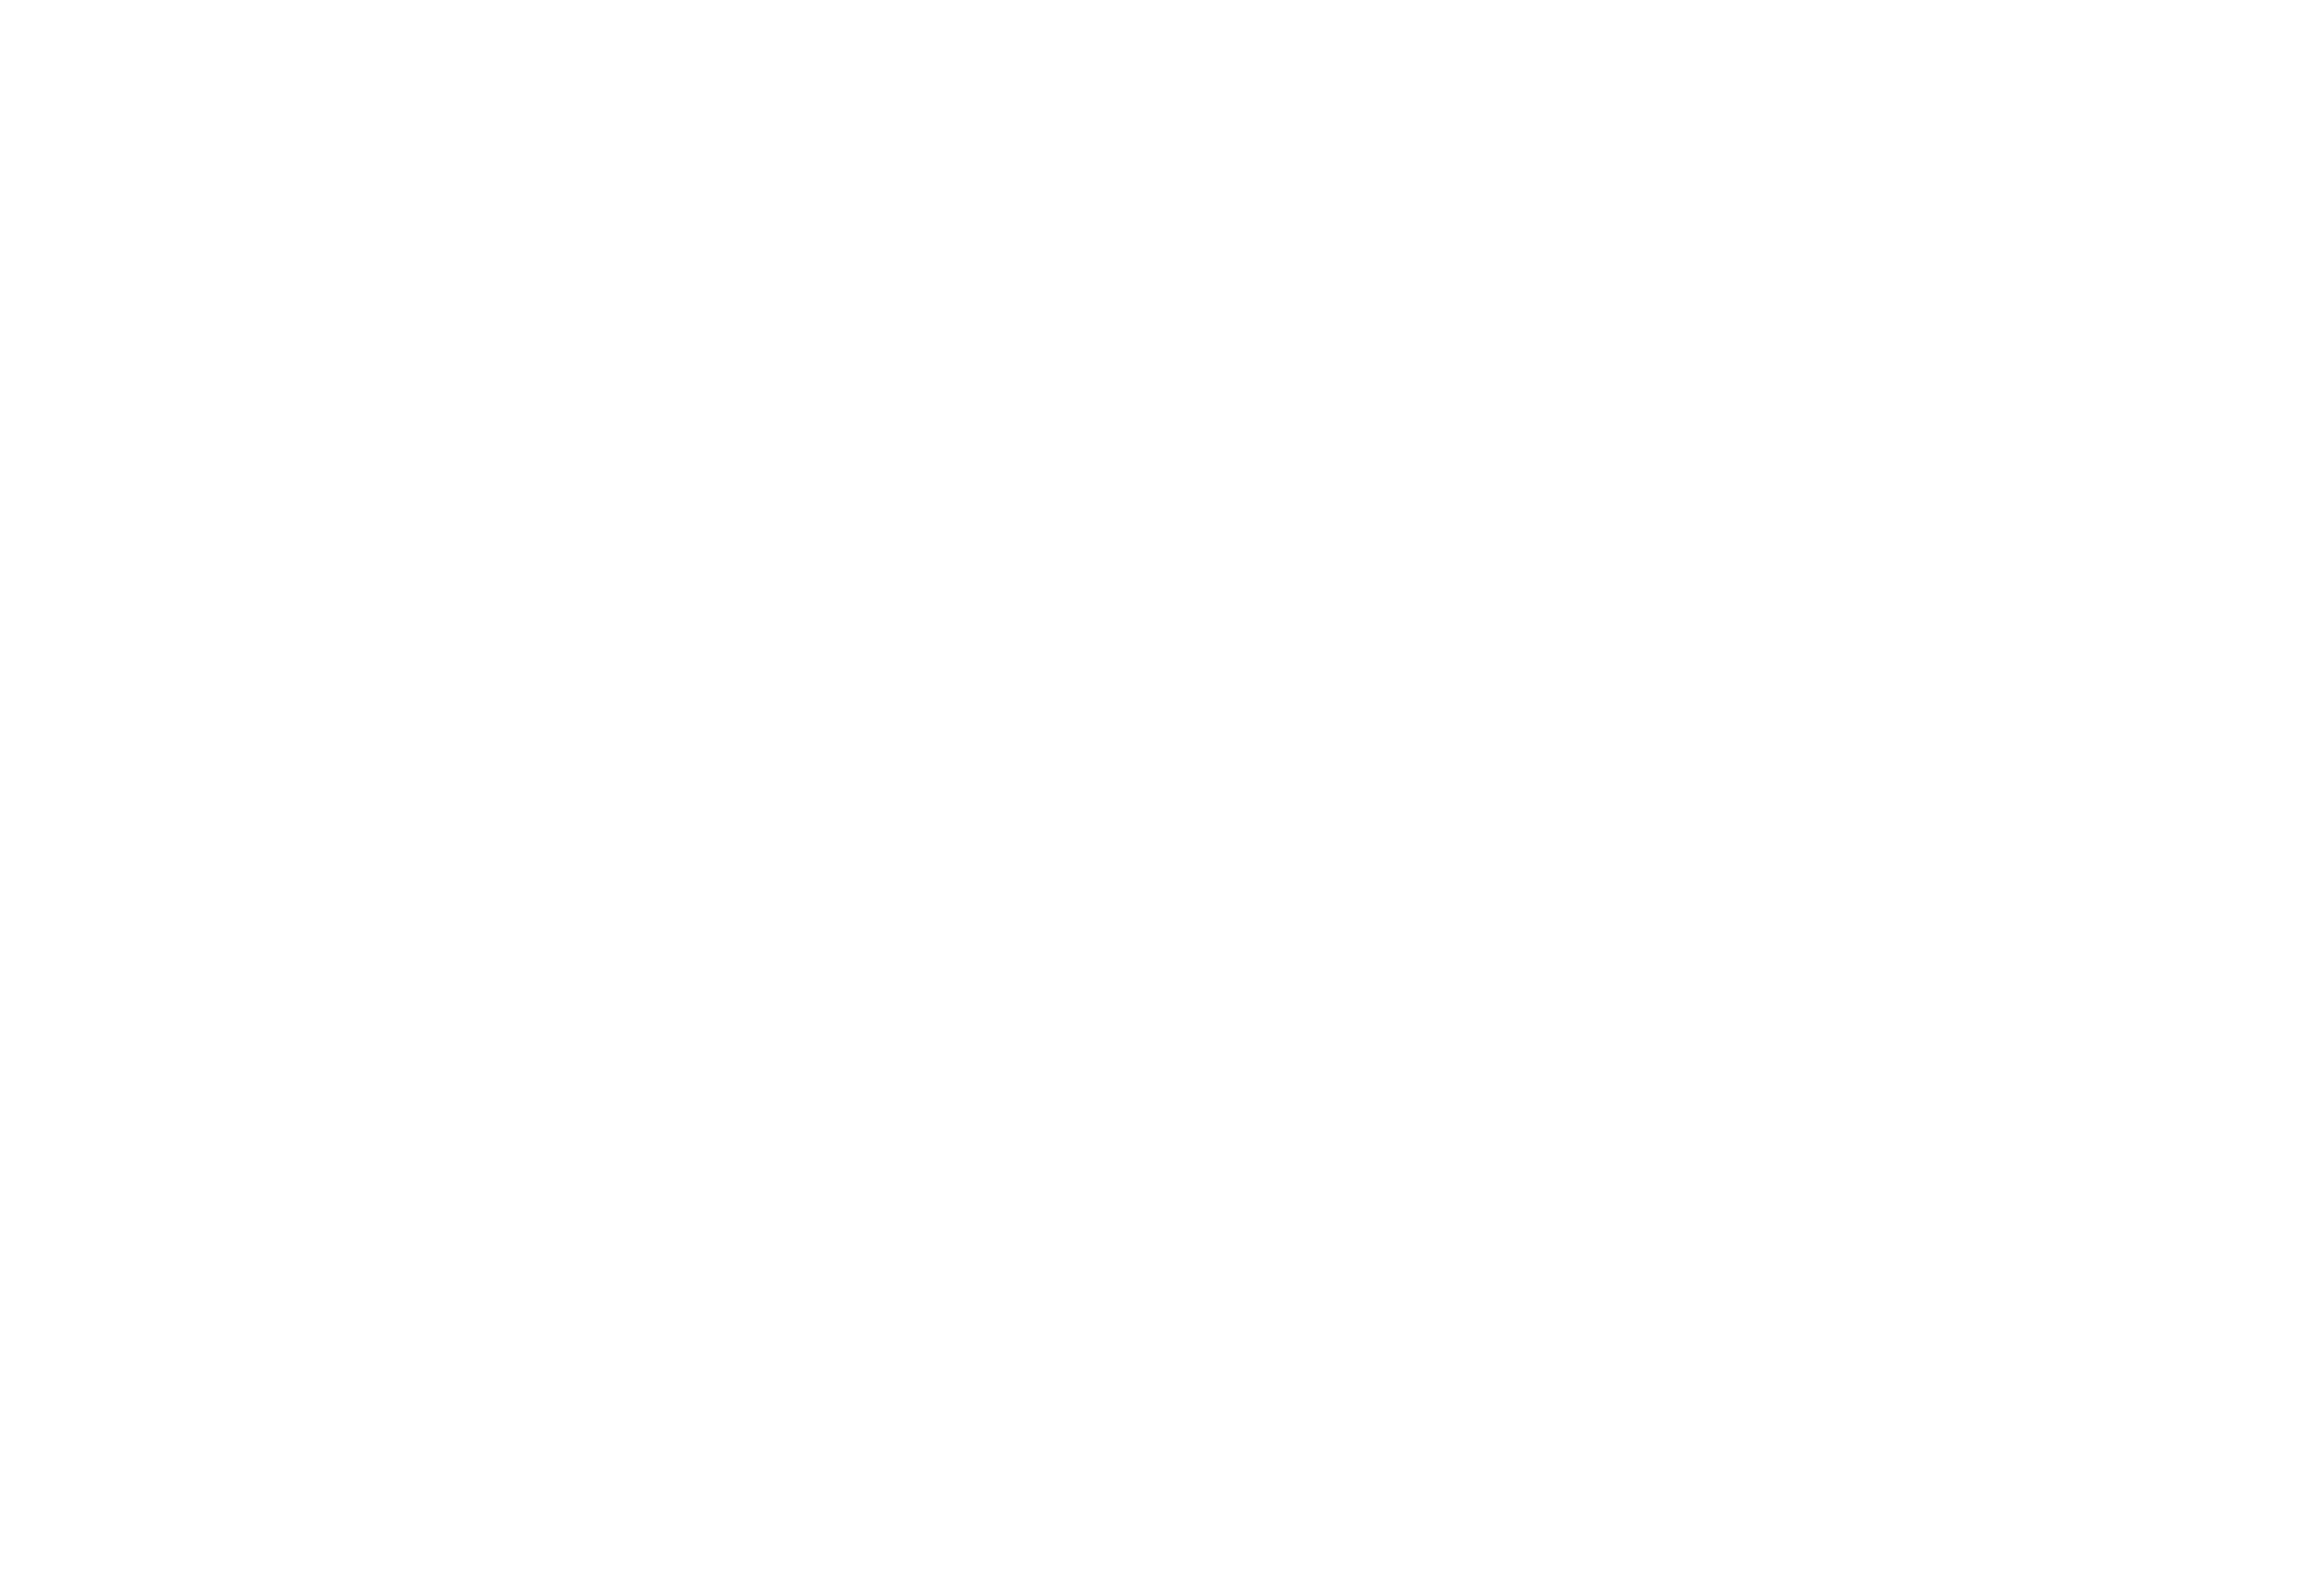 CPHR DVN